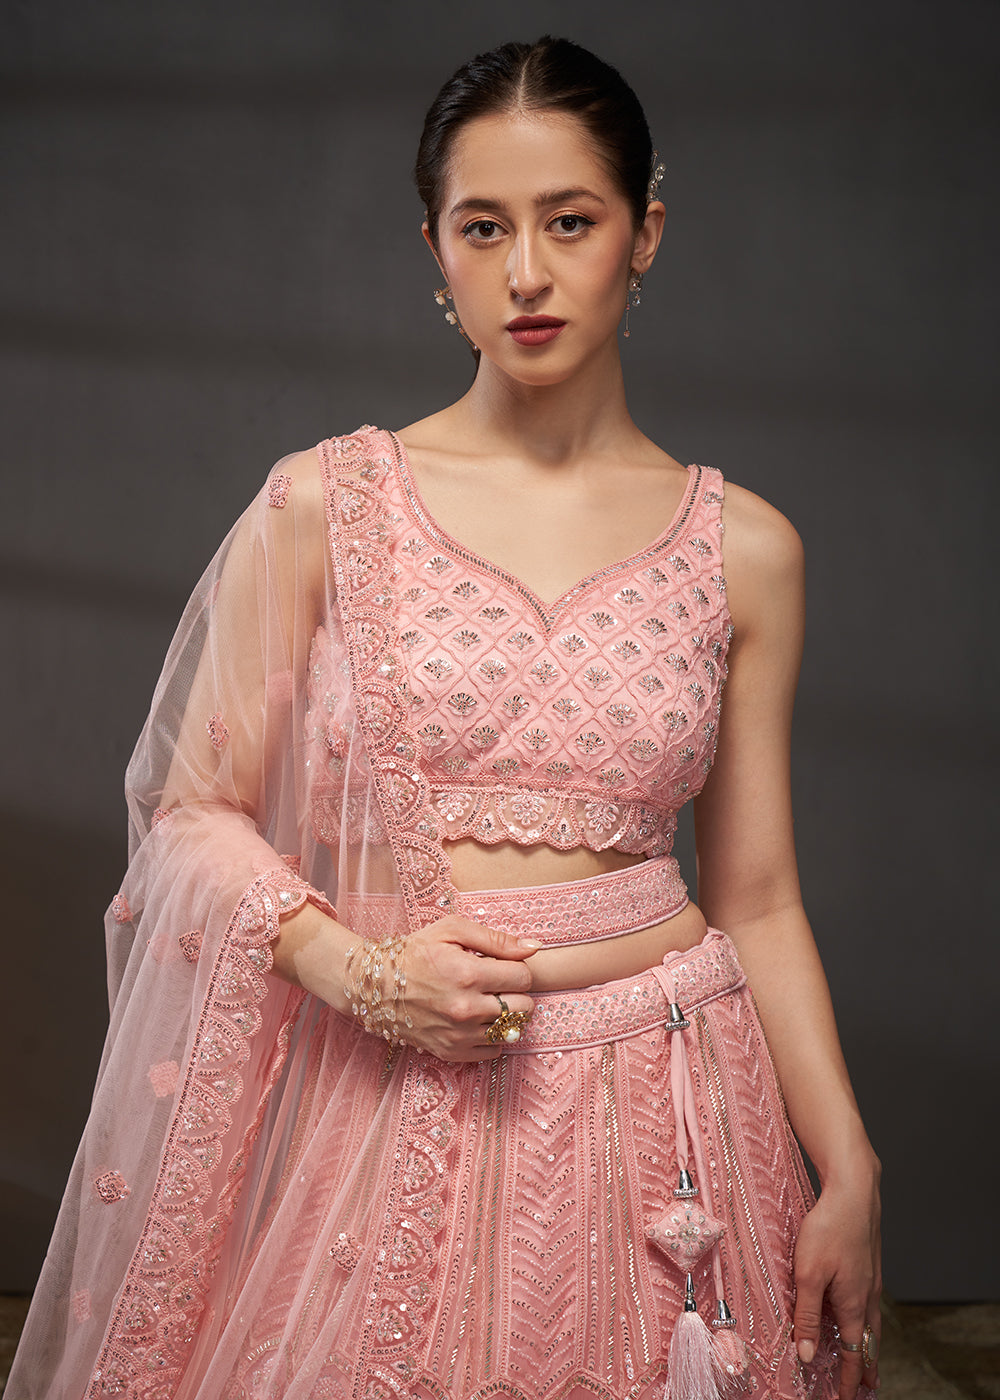 Buy Now Net Pink Heavy Embroidered Designer Bridal Lehenga Choli Online in USA, UK, Canada & Worldwide at Empress Clothing.